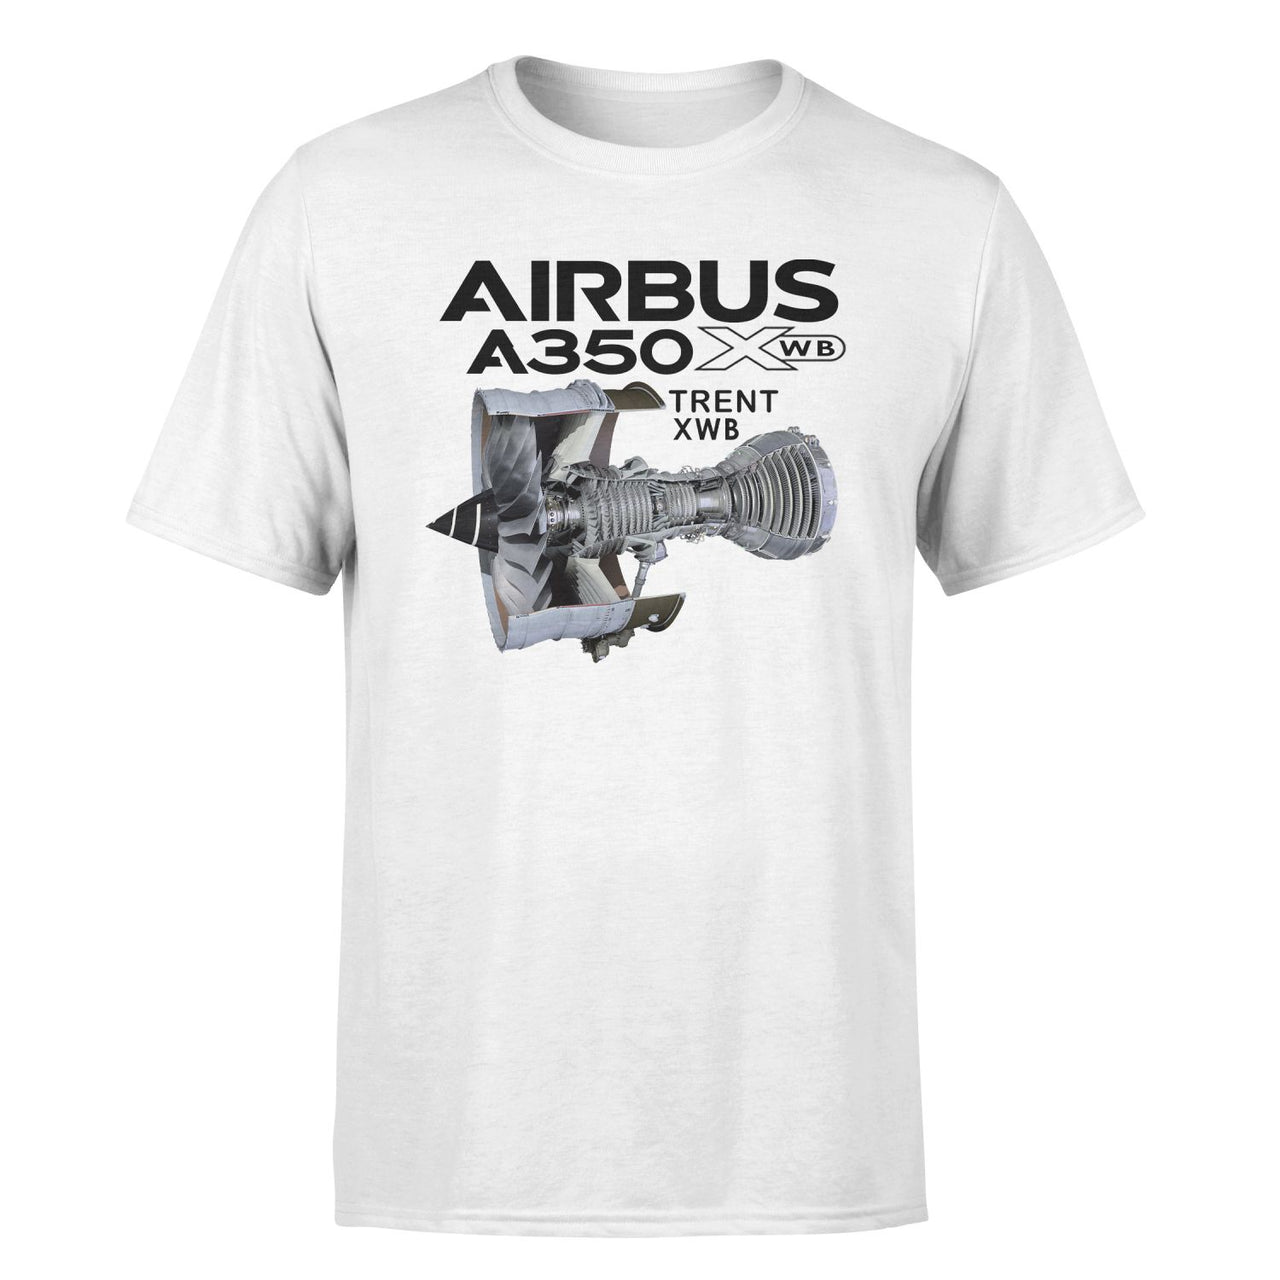 Airbus A350 & Trent Wxb Engine Designed T-Shirts